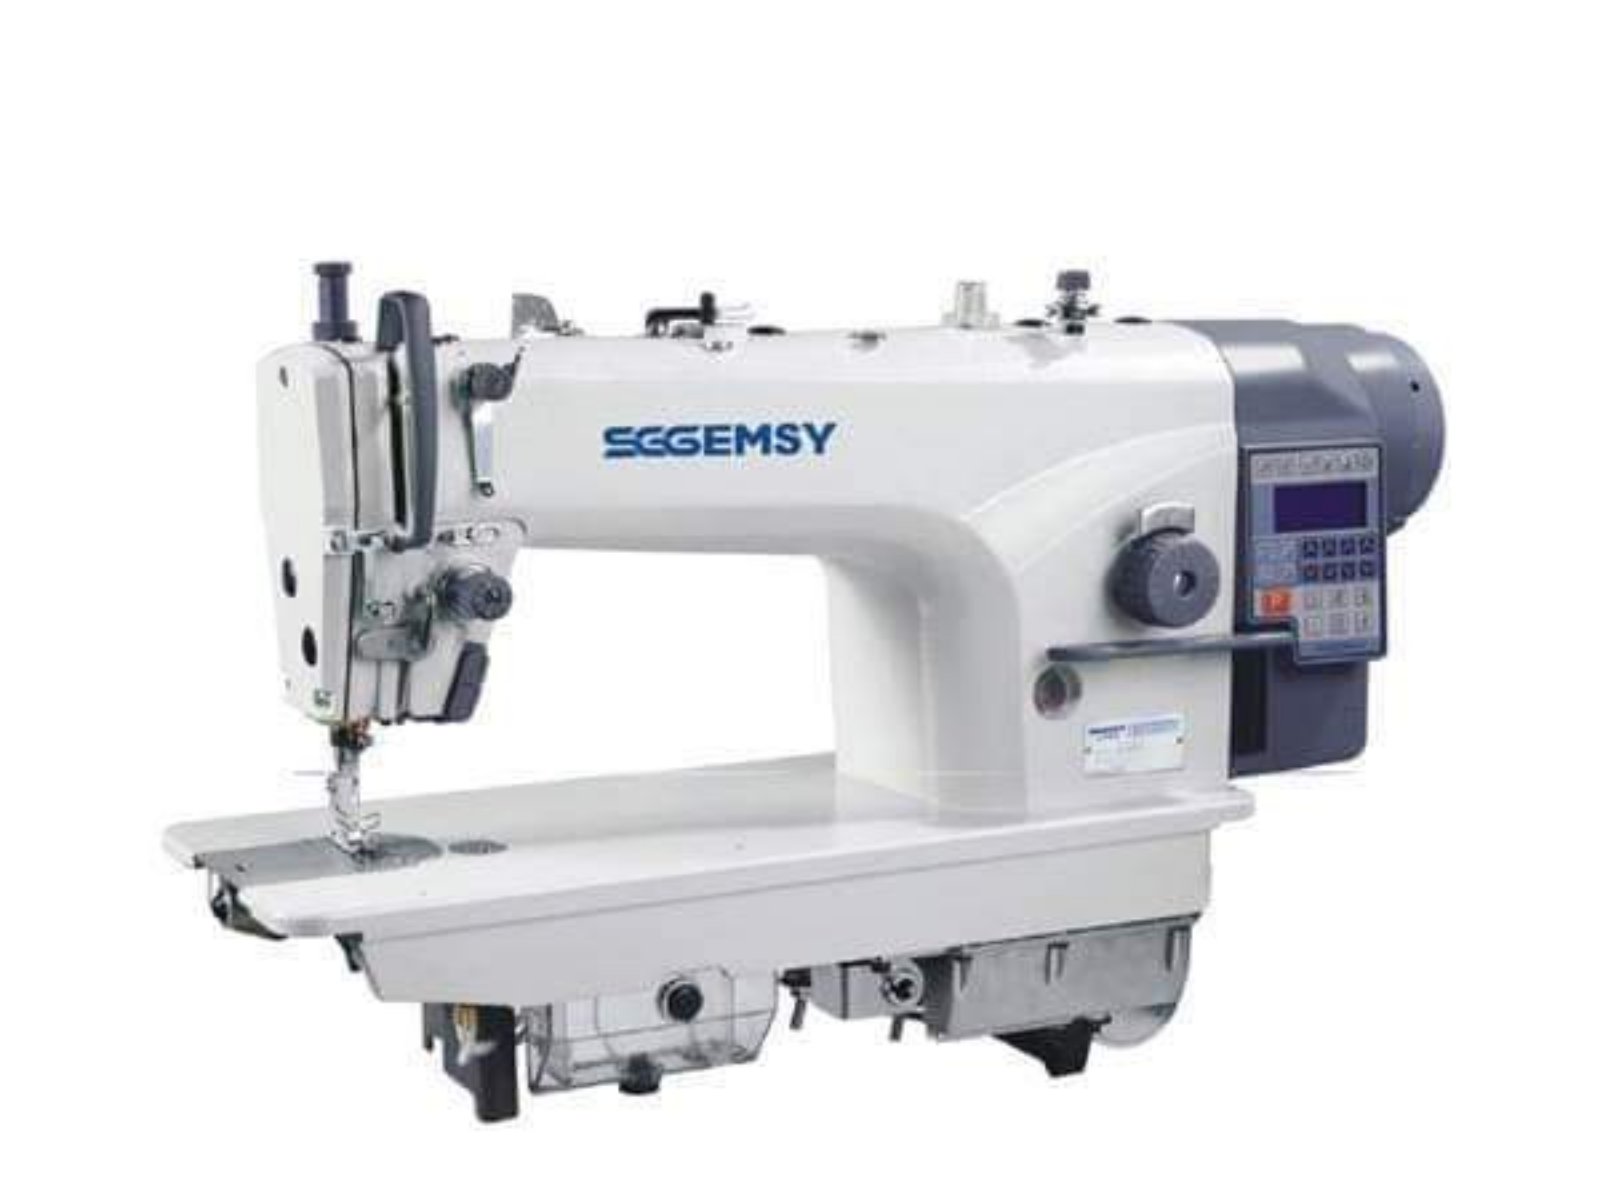 SGGemsy Automatik Hi Speed Direct Drive Motor Sewing Machine 